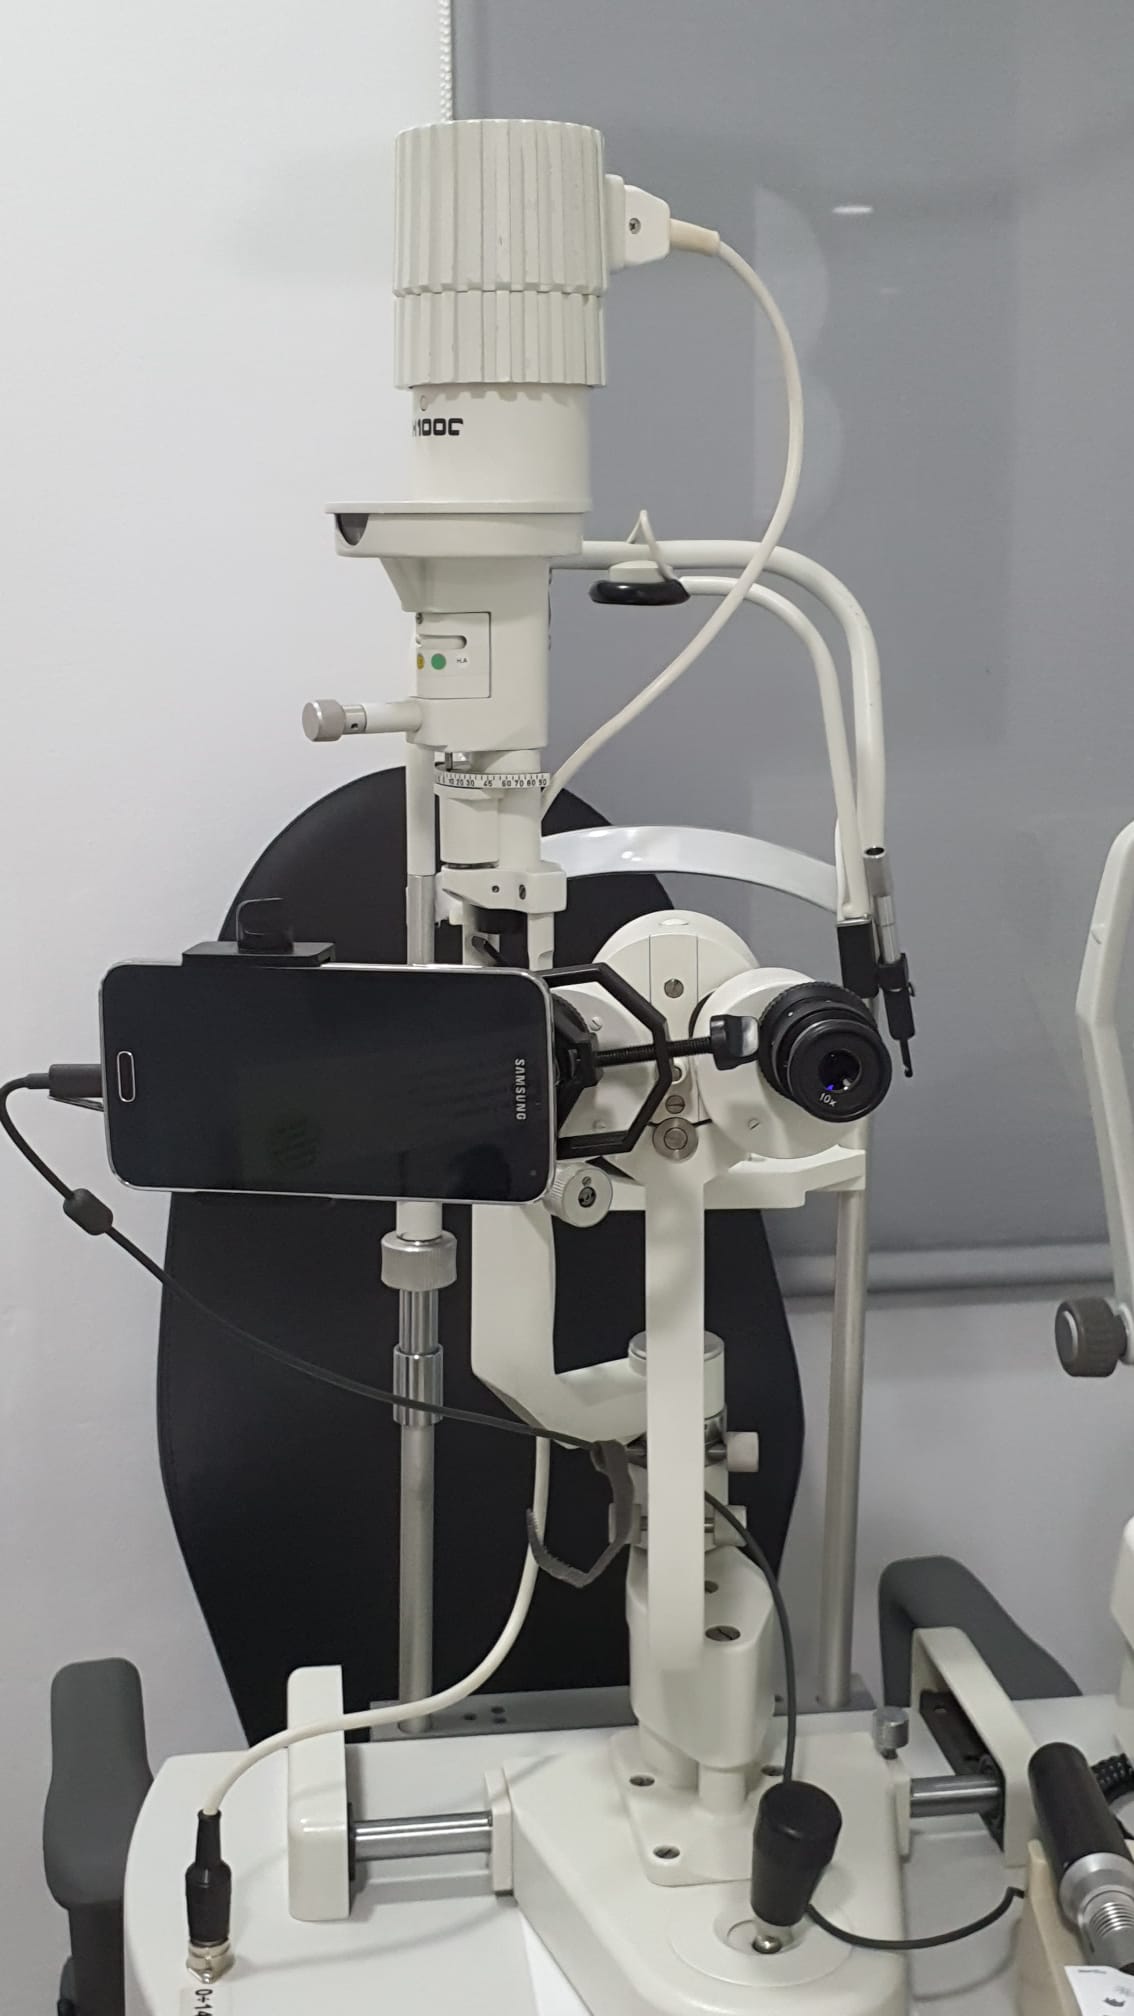 Biomicroscopio o lámpara de hendidura